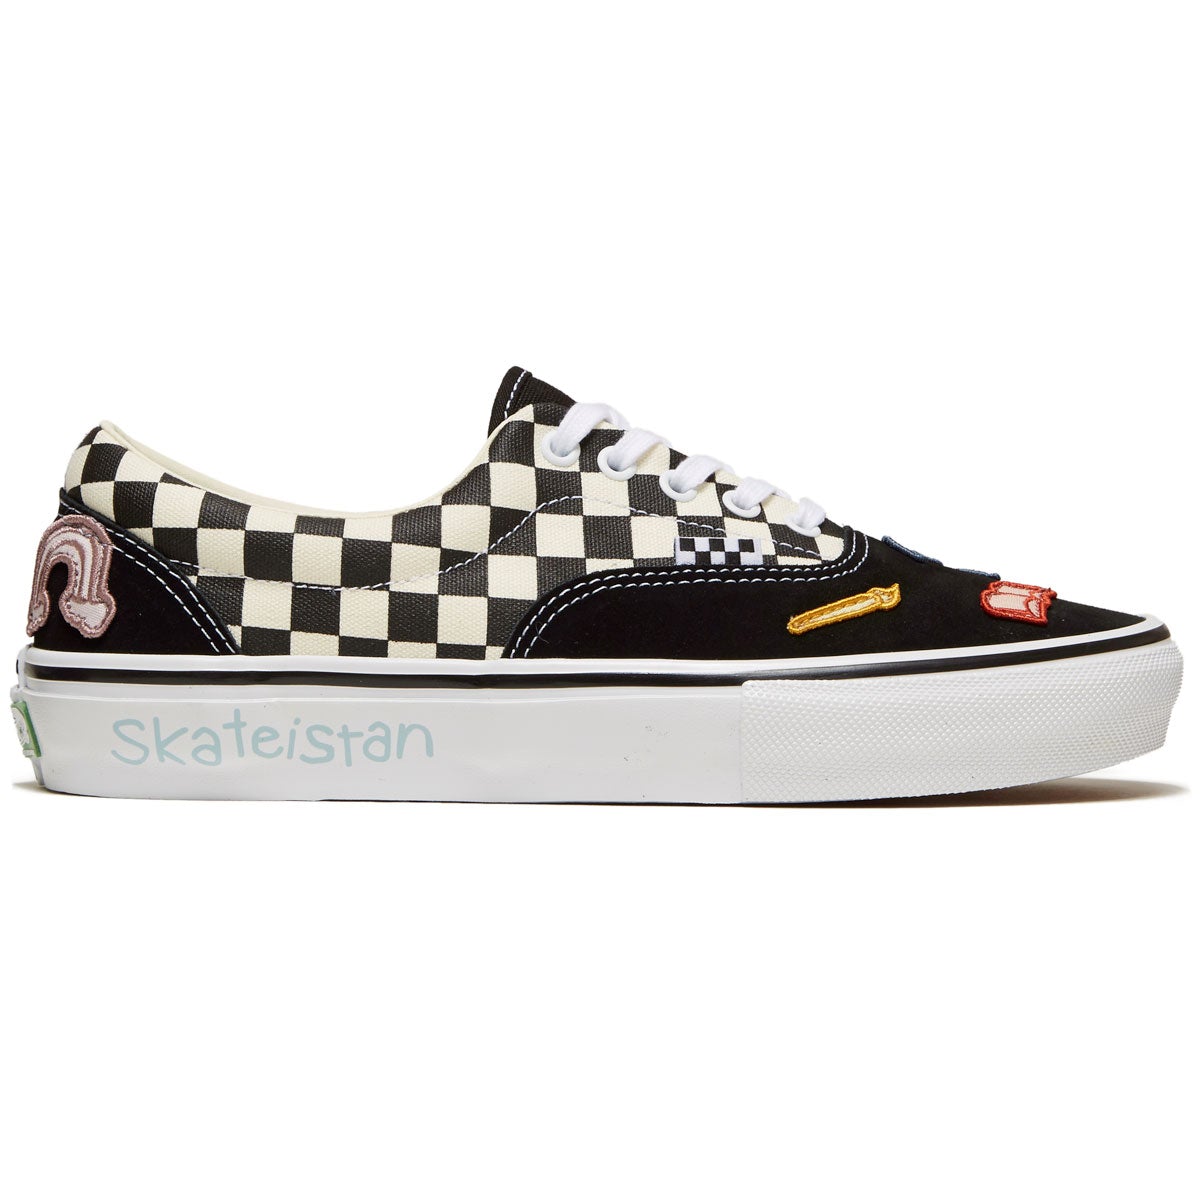 Vans Skate Era Shoes - Skateistan Checkerboard image 1